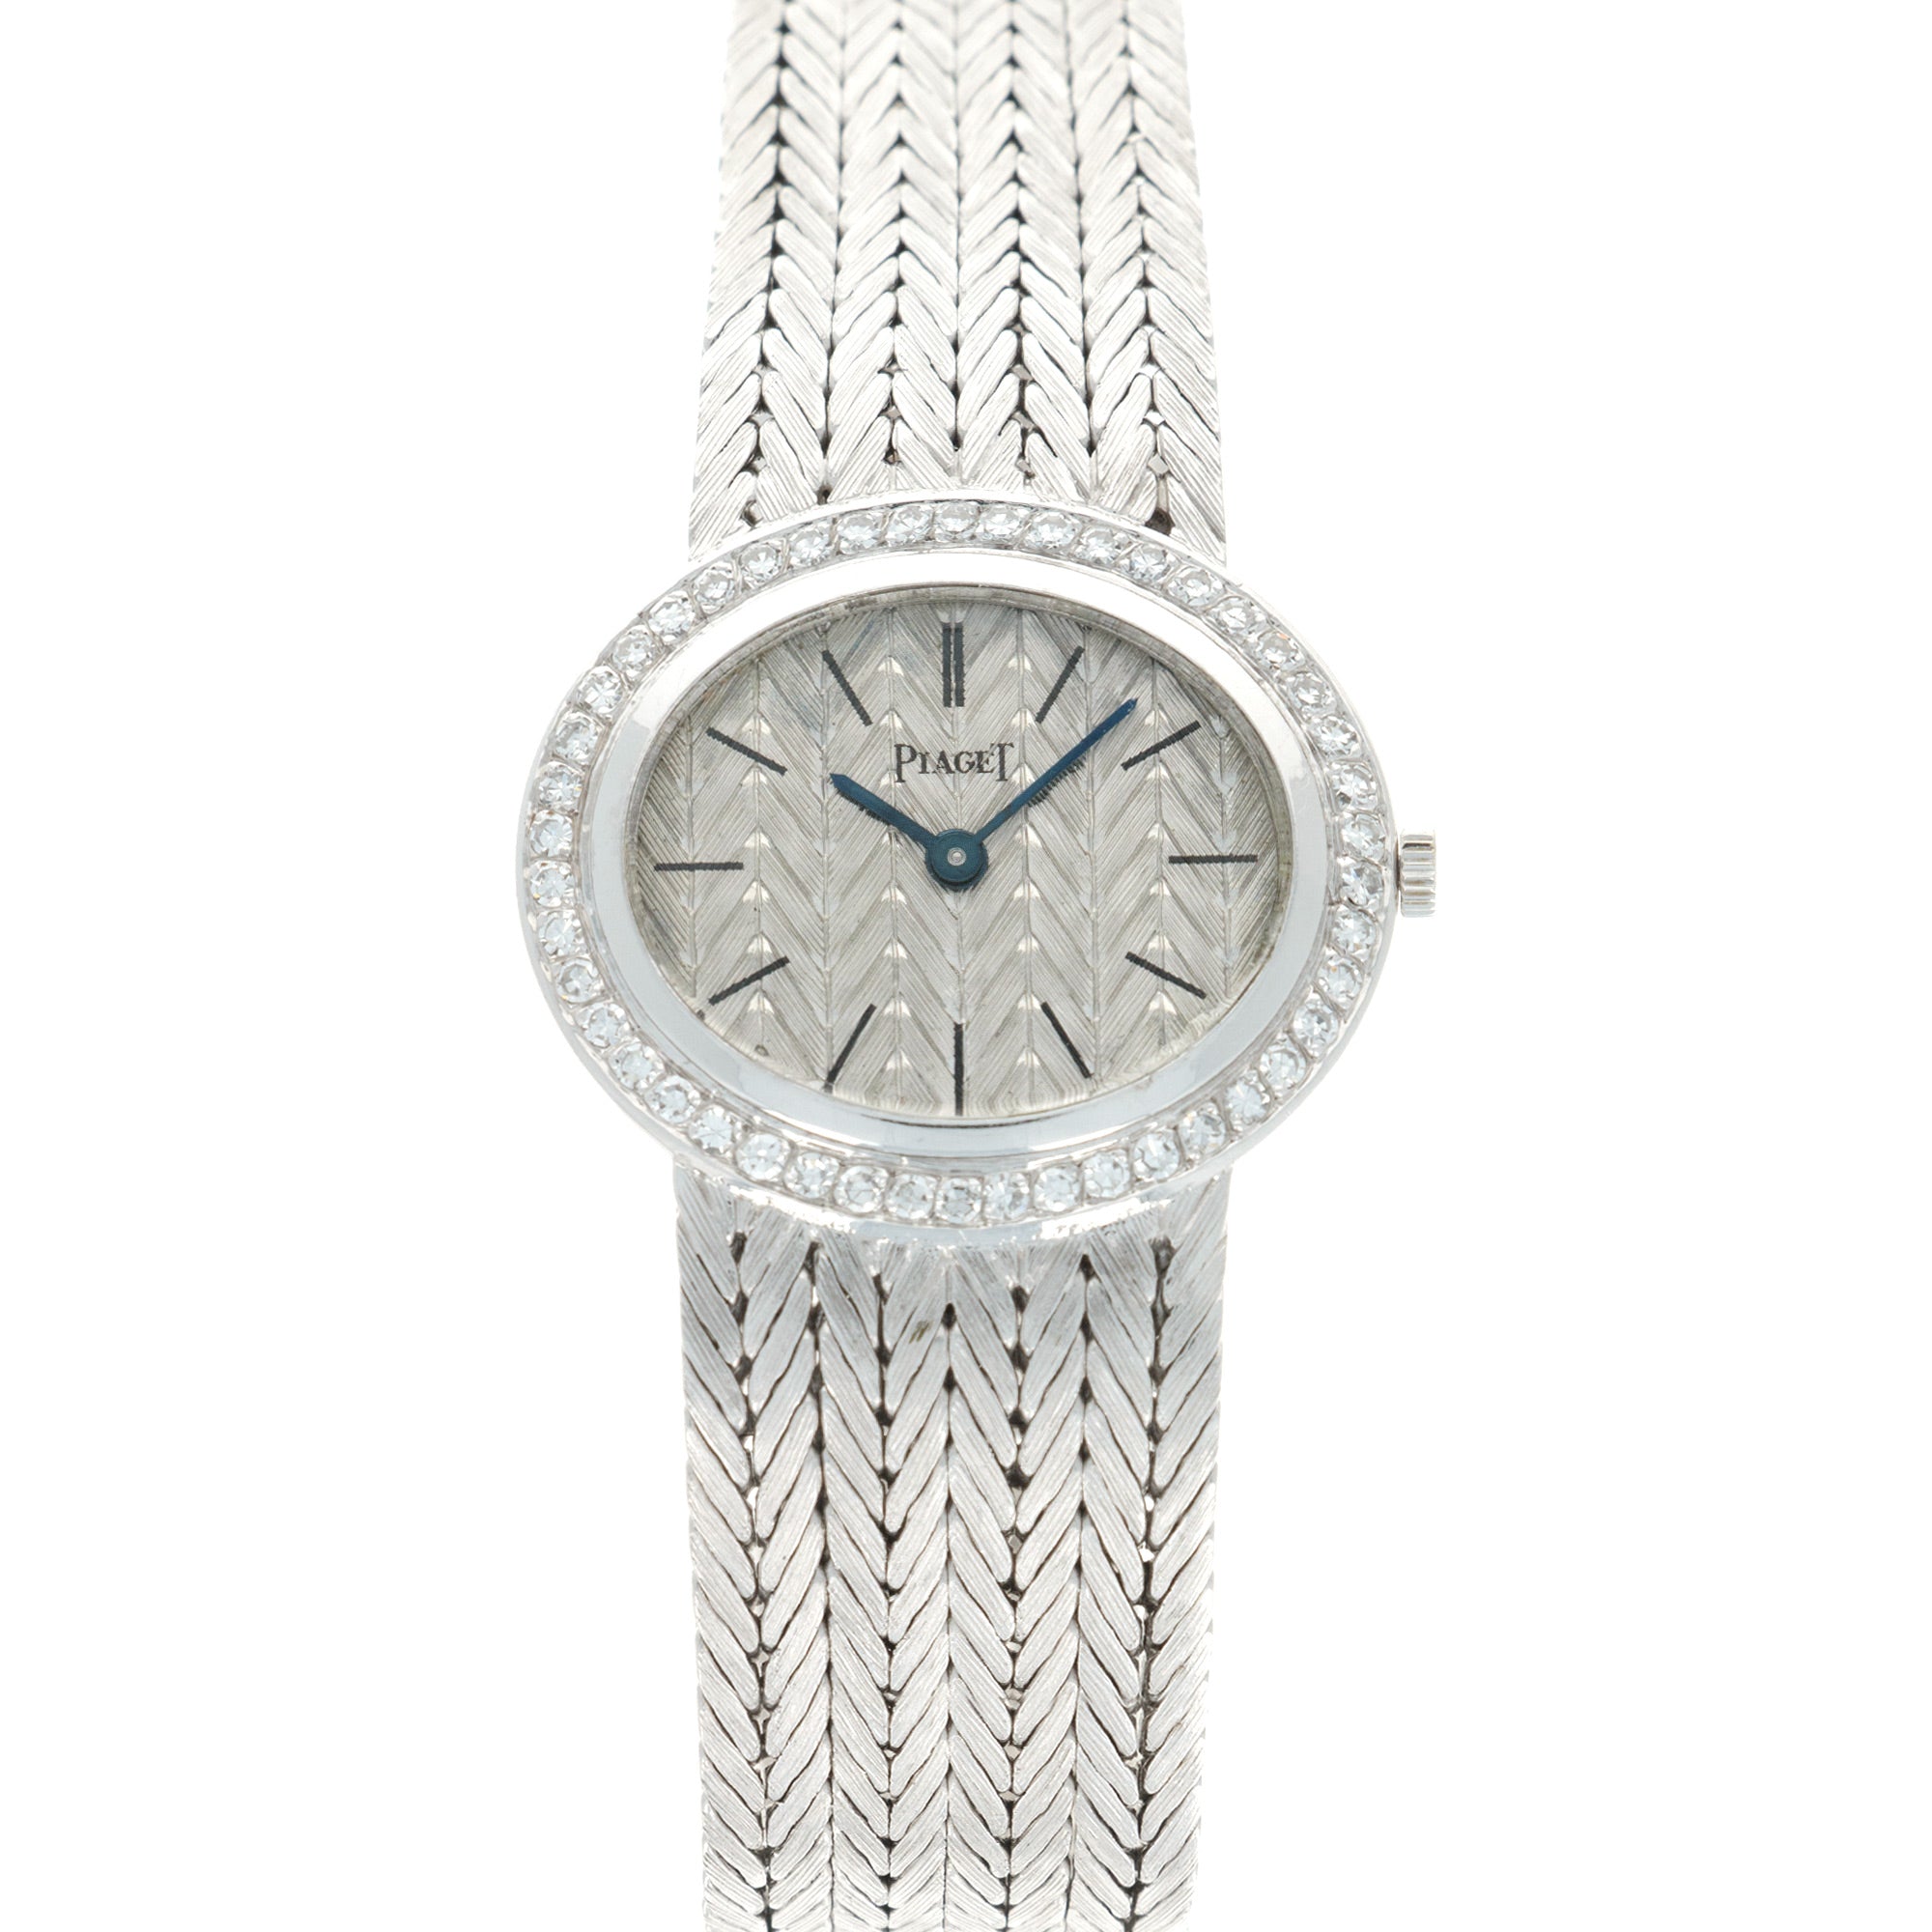 Piaget - Piaget White Gold Diamond Watch, 1960s - The Keystone Watches